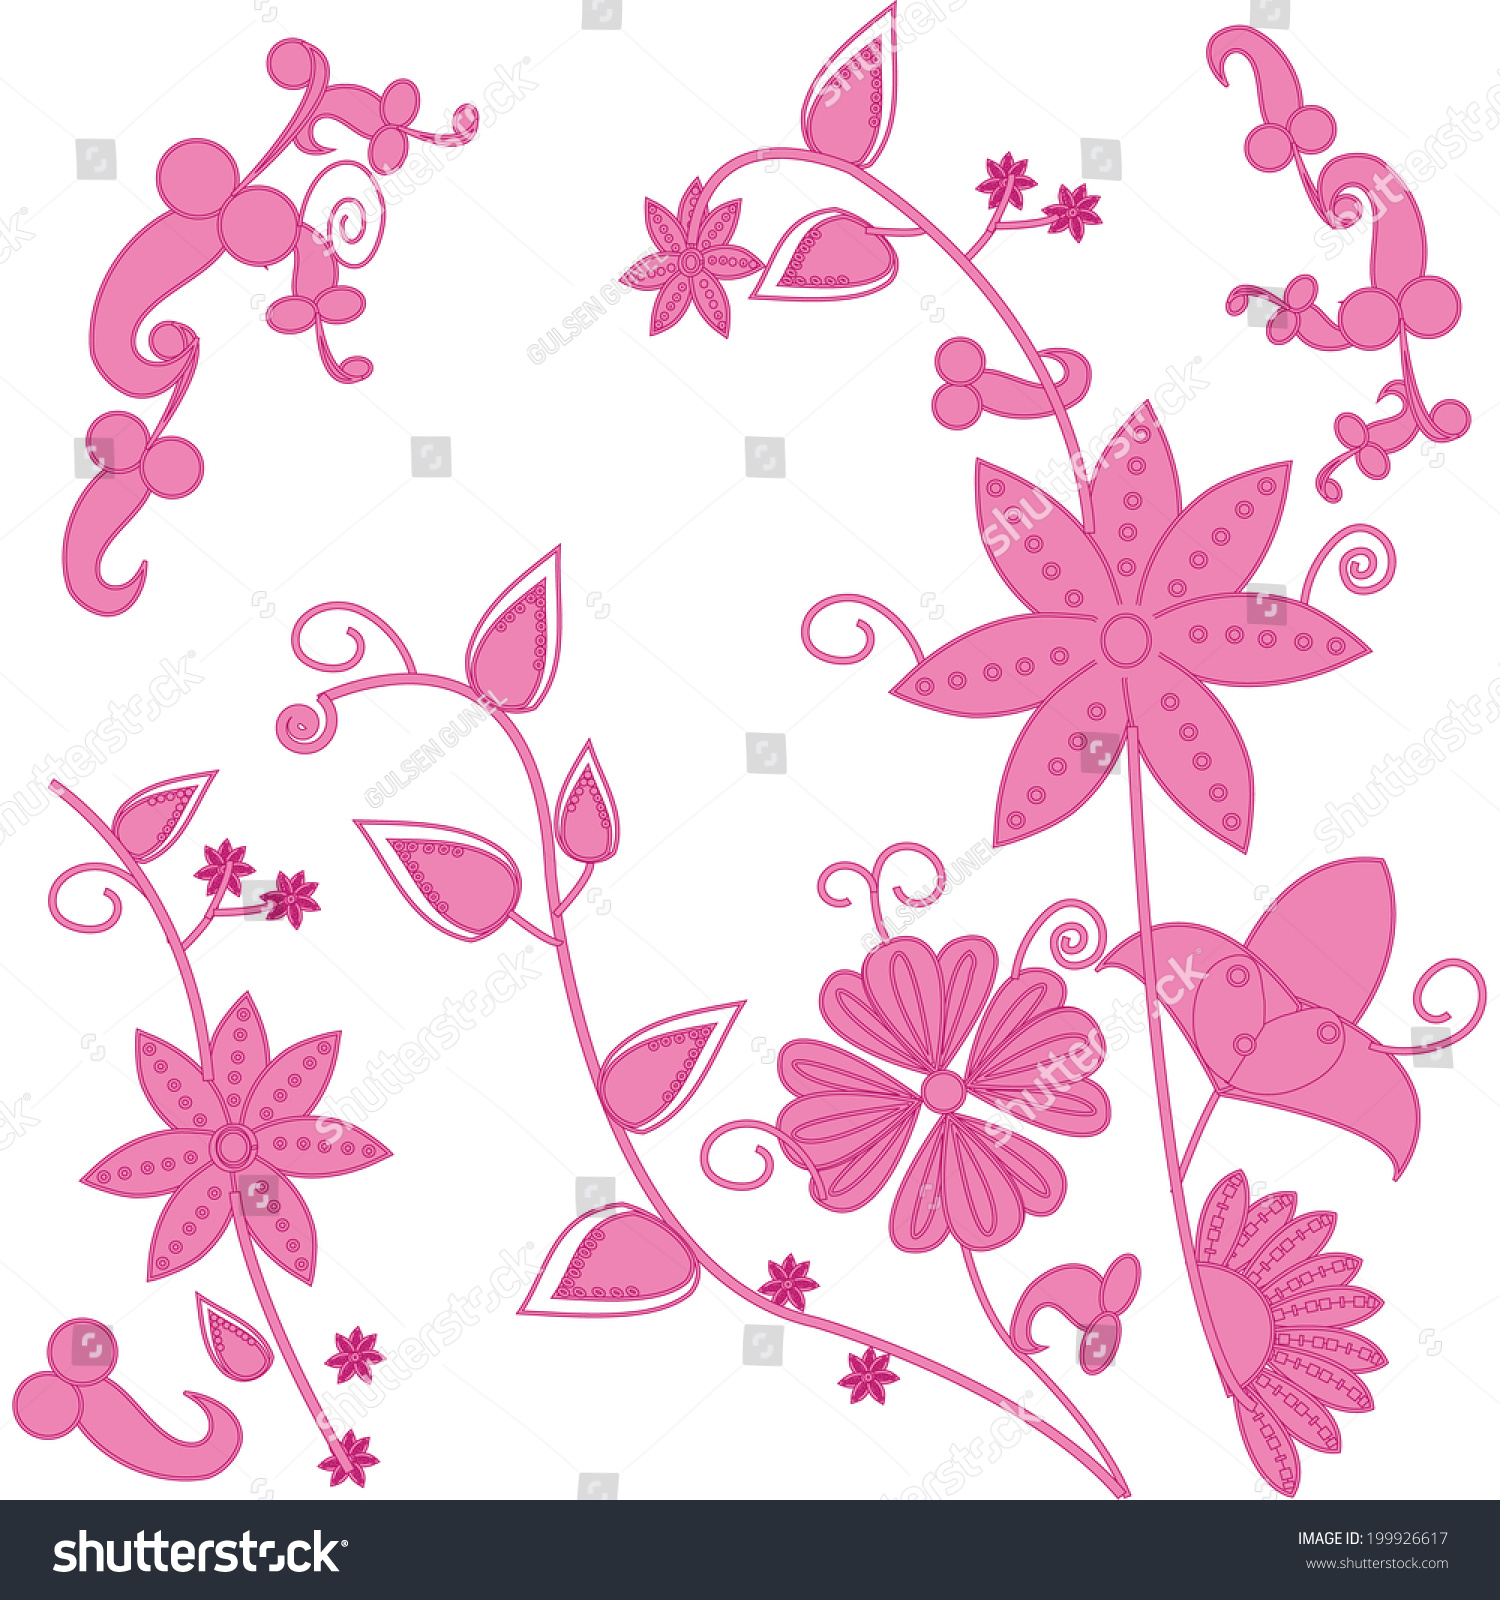 Abstract Pink Flower Vector Stock Vector 199926617 - Shutterstock